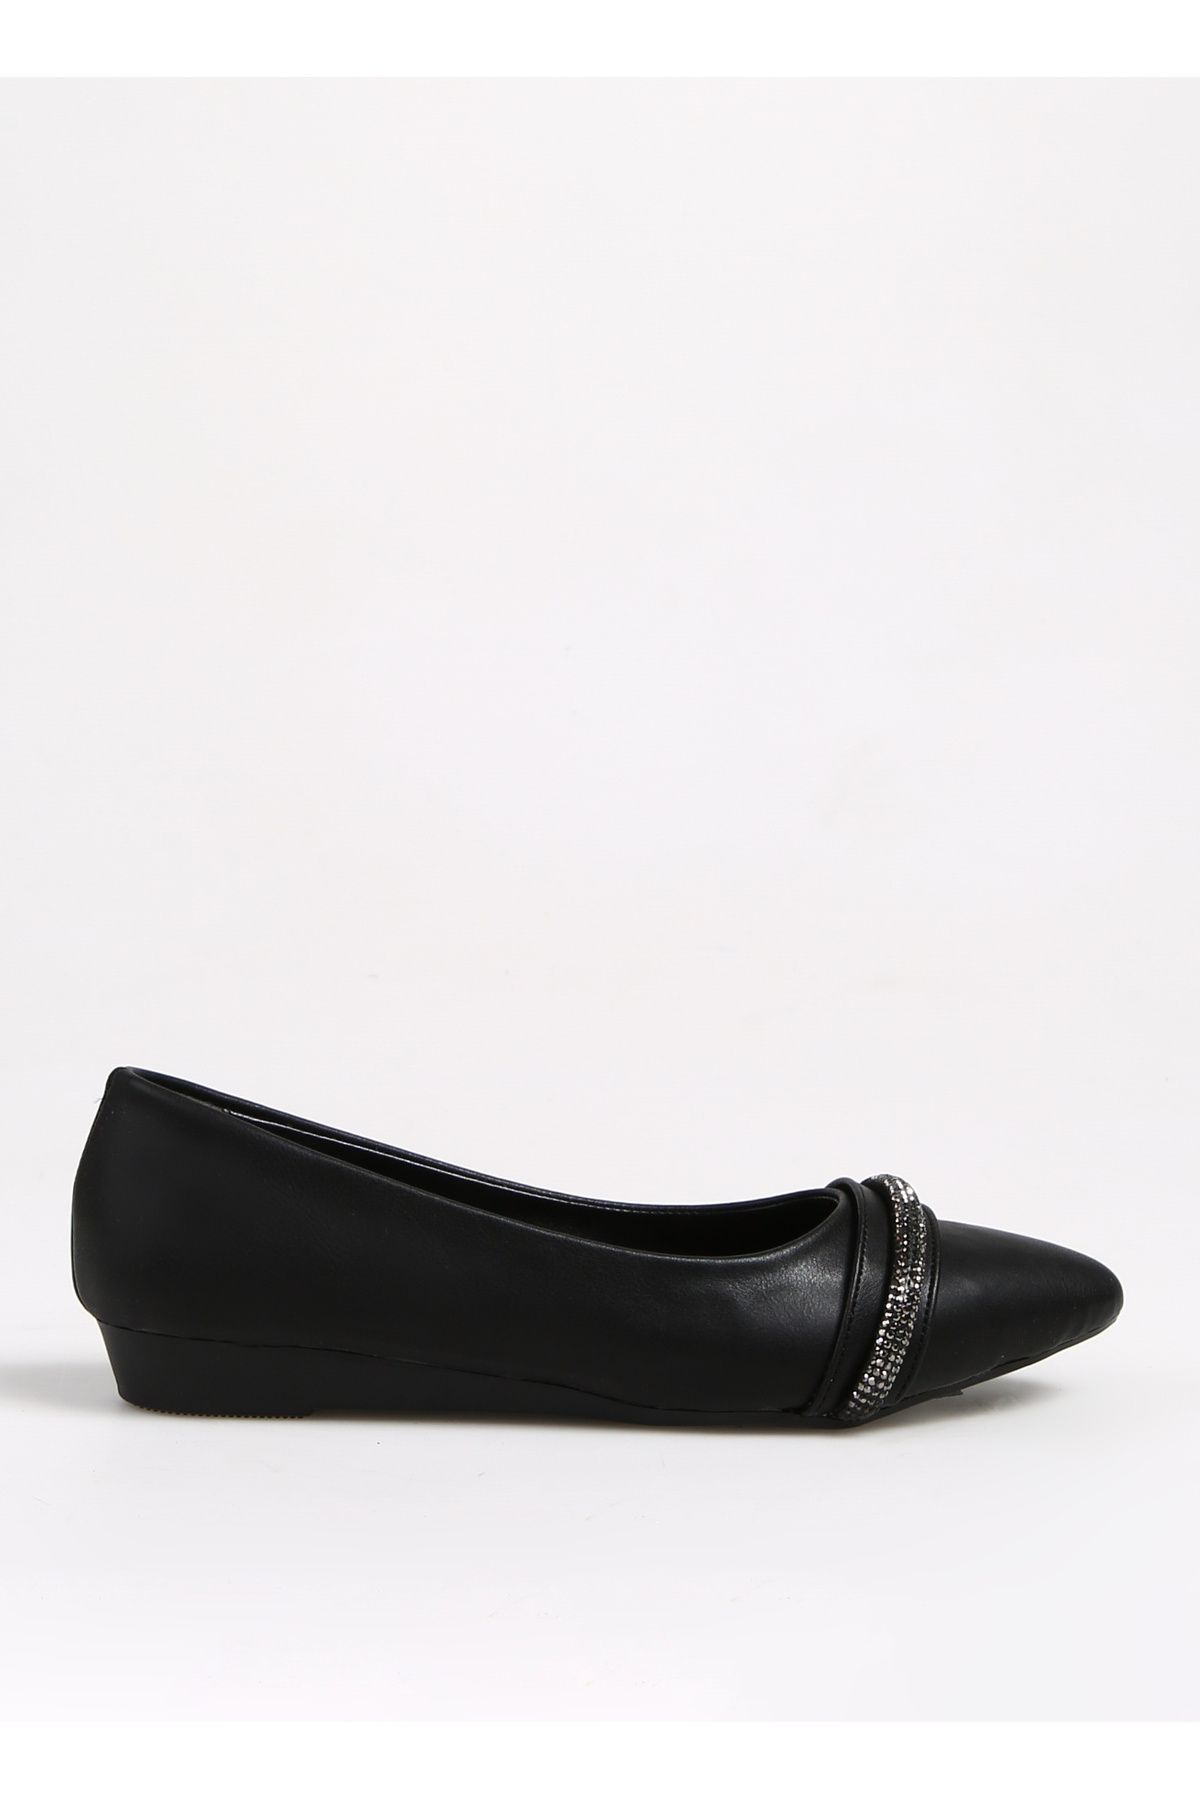 F By Fabrika Siyah Kadın Günlük Ayakkabı YOTI